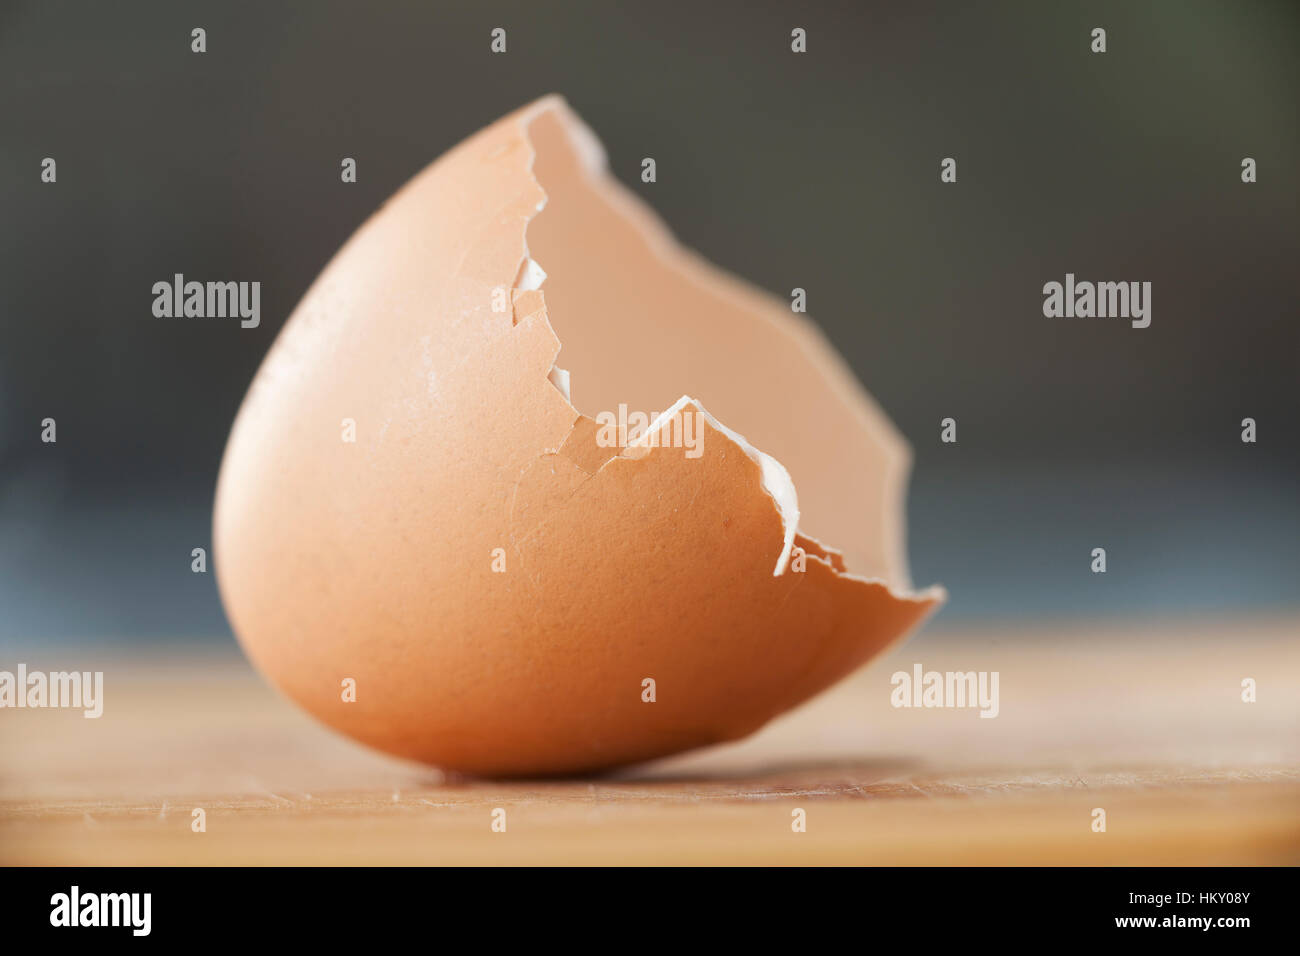 A broken half of an eggshell on a wooden work surface. Stock Photo